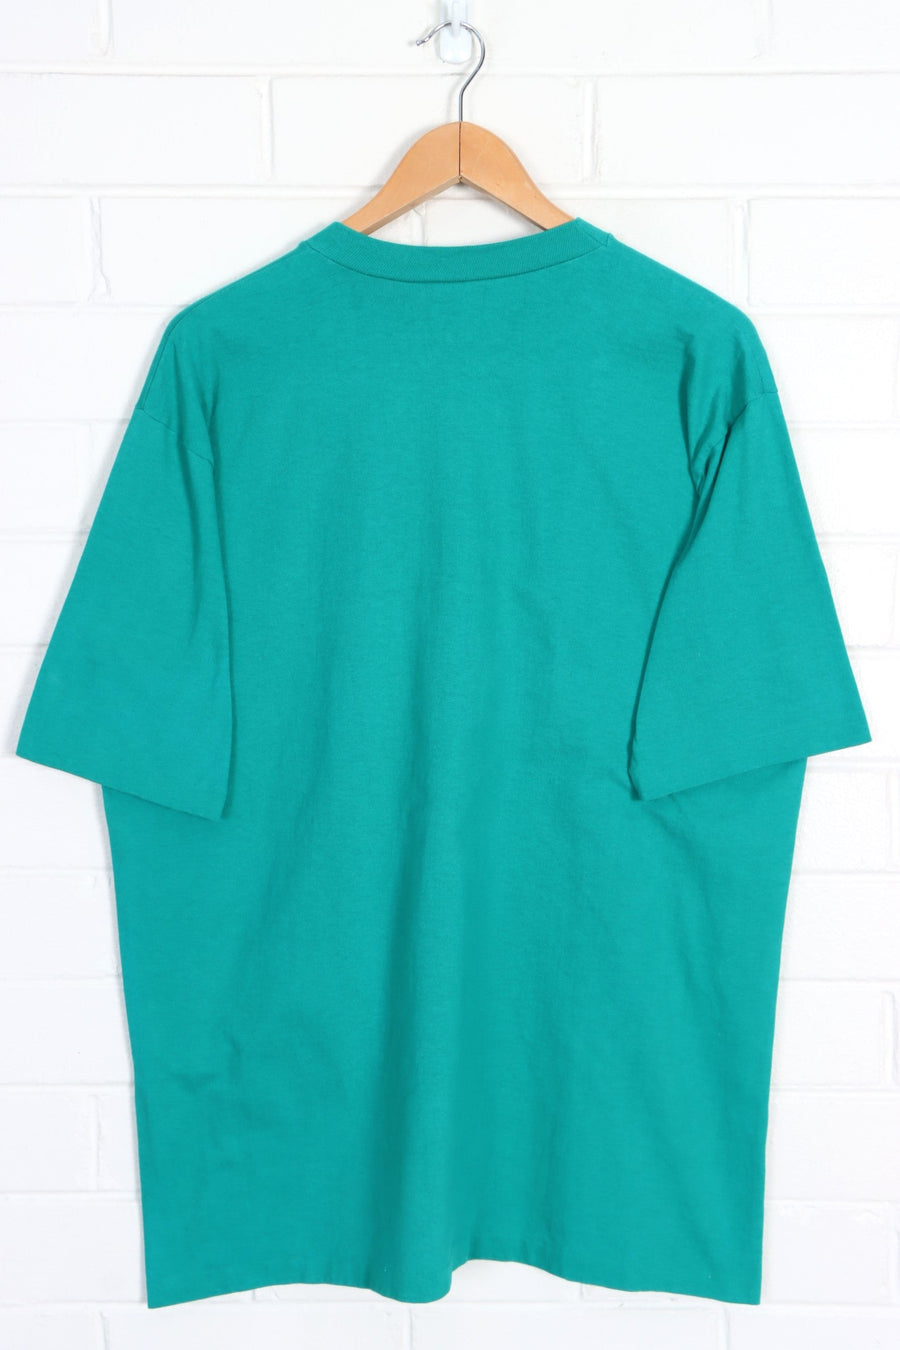 Canada Tree & Mountains Single Stitch Green T-Shirt (L)